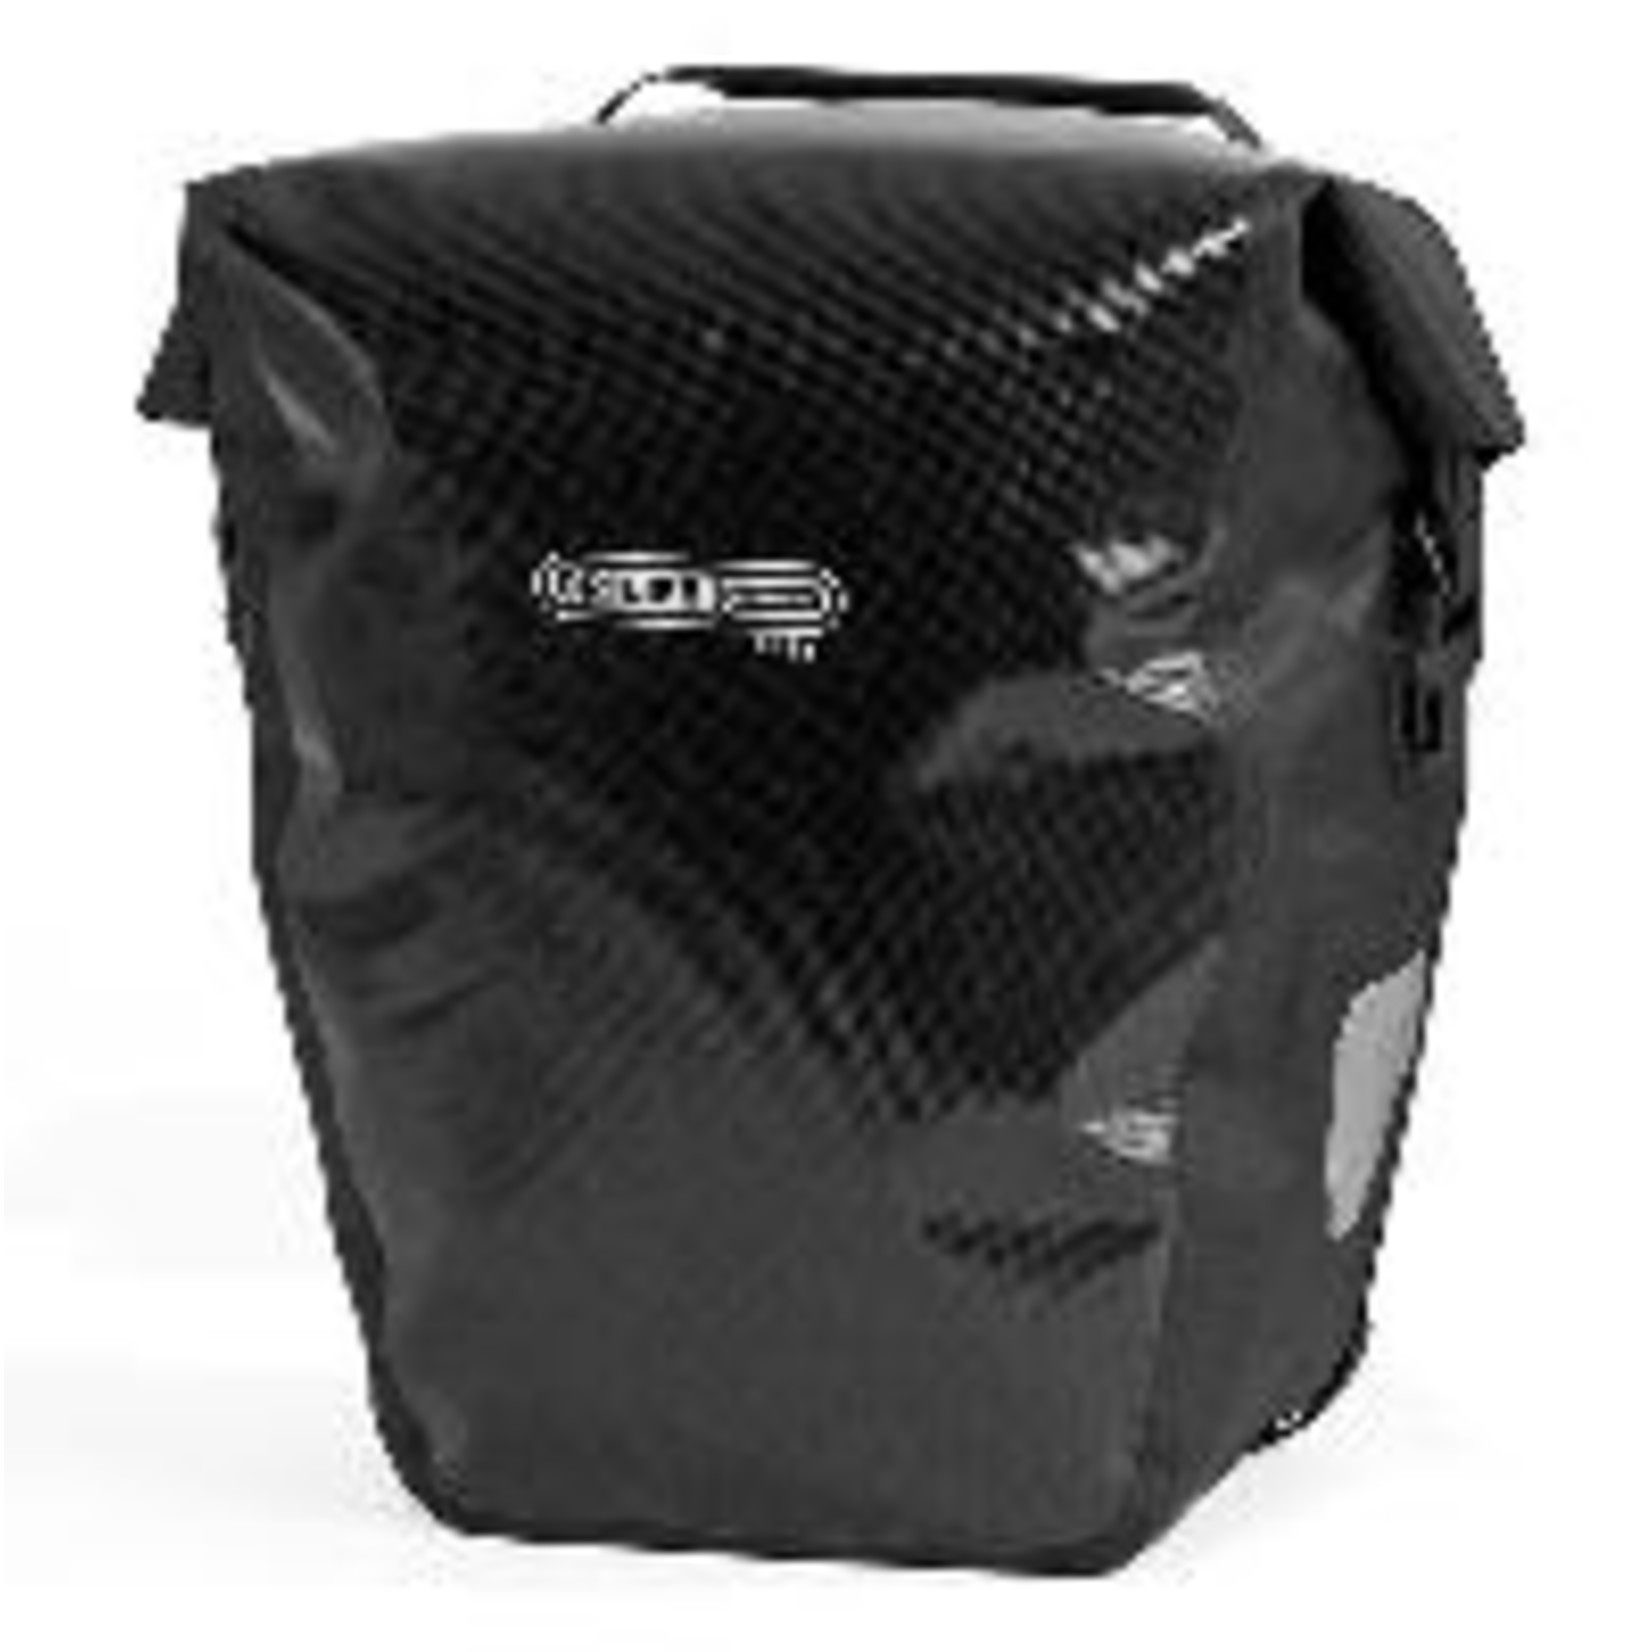 Ortlieb Ortlieb Back-Roller City QL1 Bike Pannier Bag F5002 - Black(Single Bag)